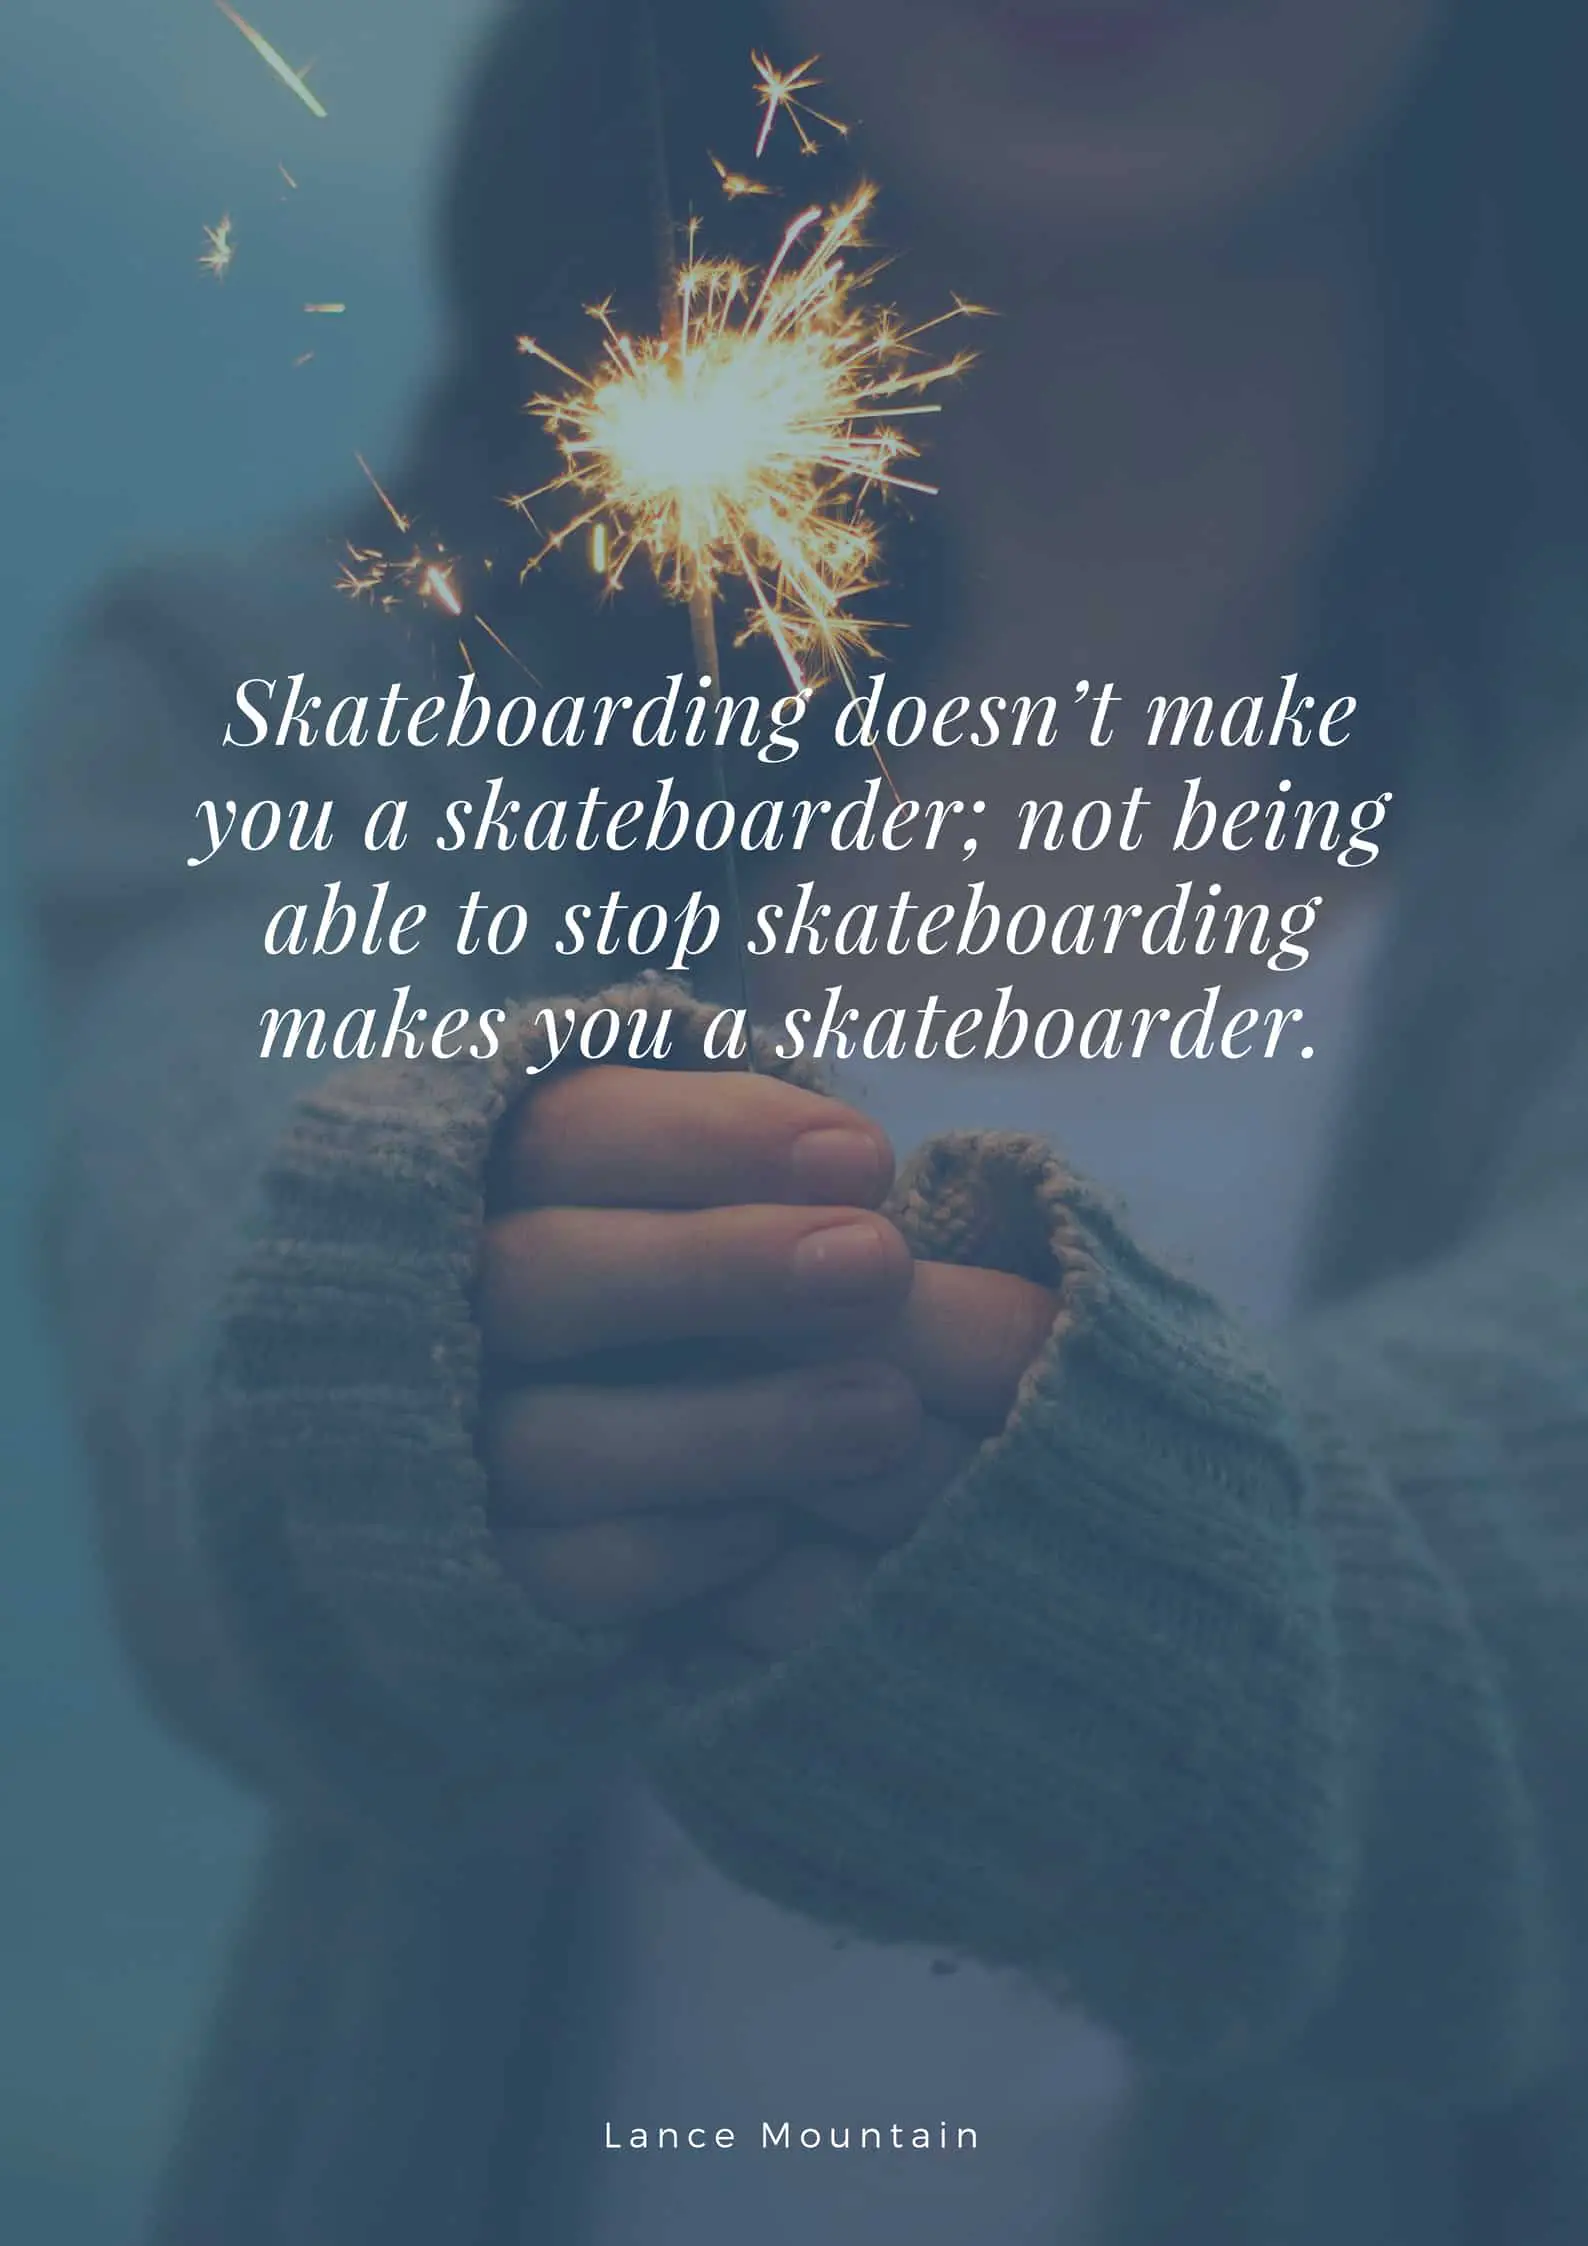 Skateboarding doesn’t make you a skateboarder not being able to stop skateboarding makes you a skateboarder.